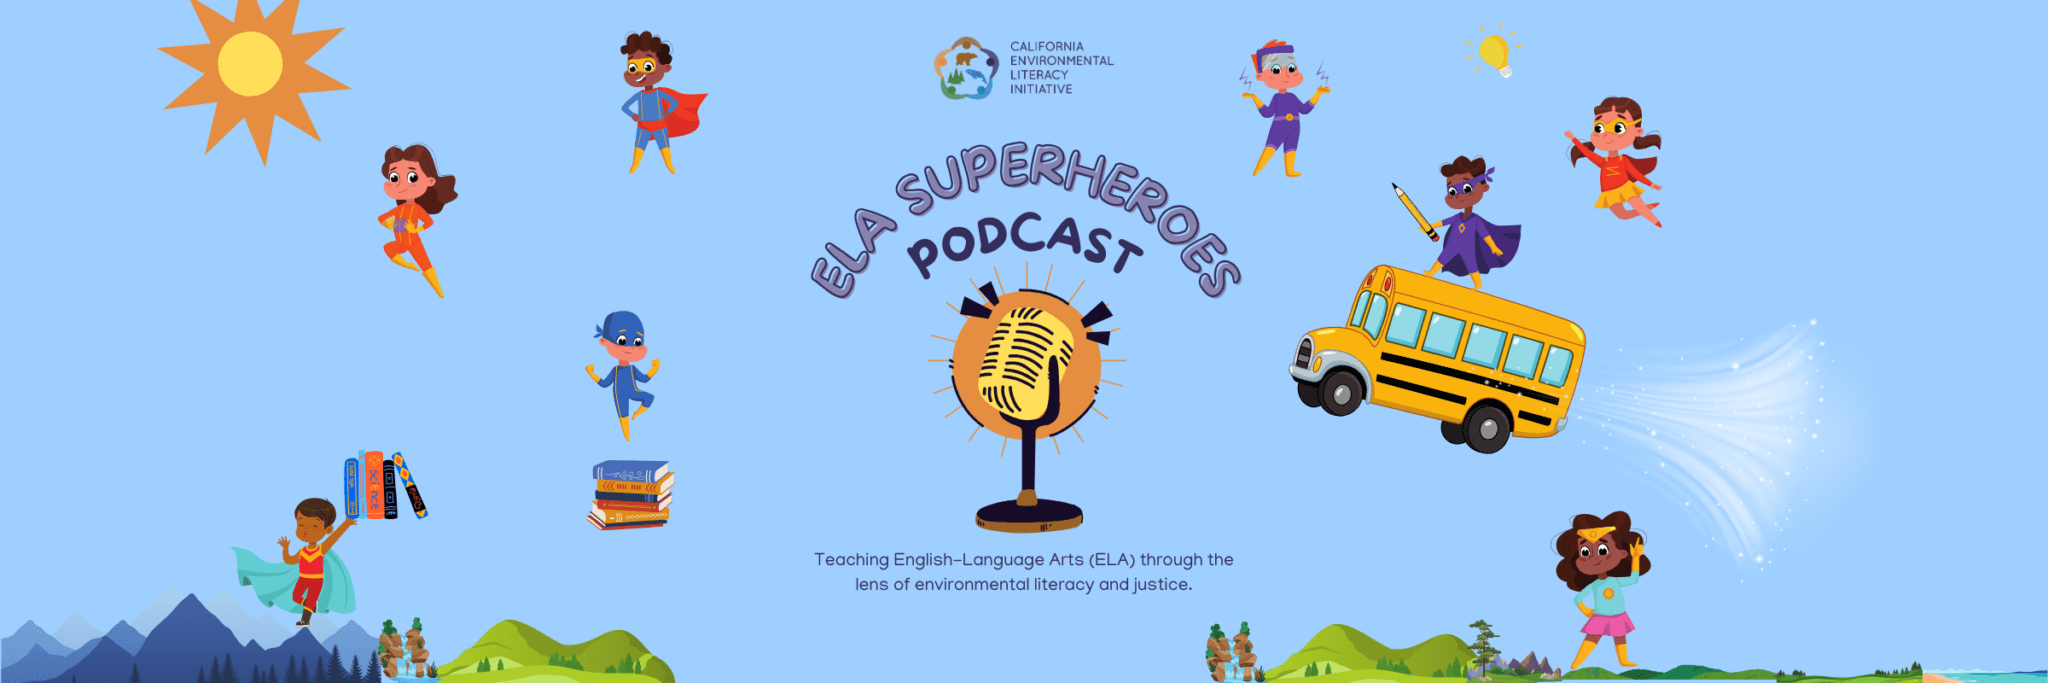 ela superheroes podcast, graphics of superhero kids learning